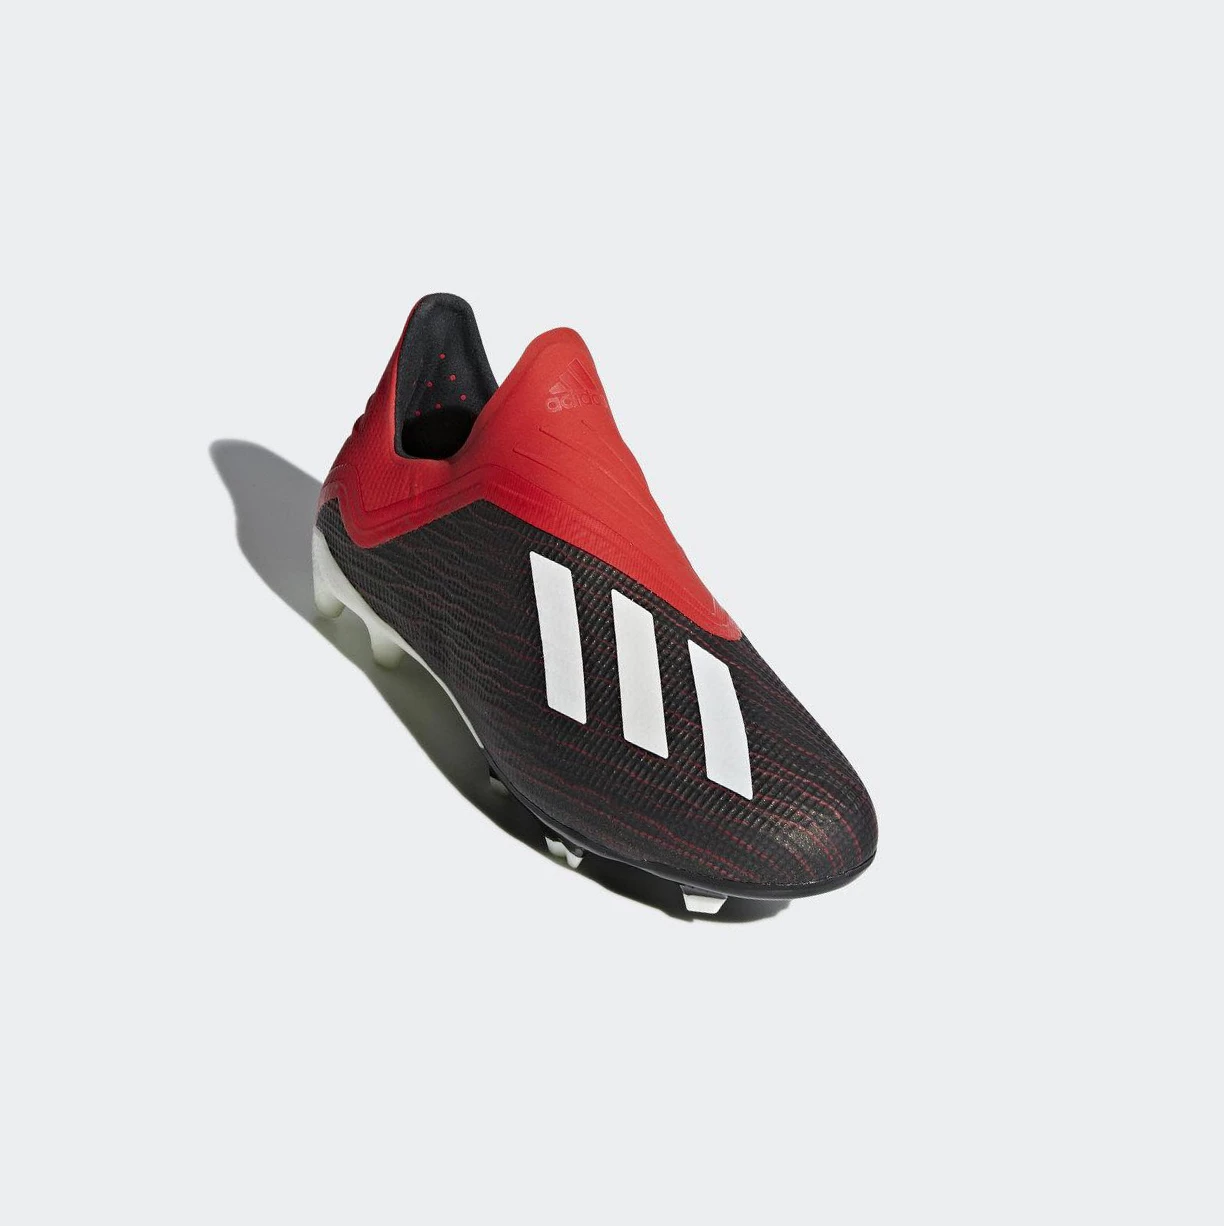 Kopačky Adidas X 18+ Firm Ground Panske Čierne | 013SKEWCDJI